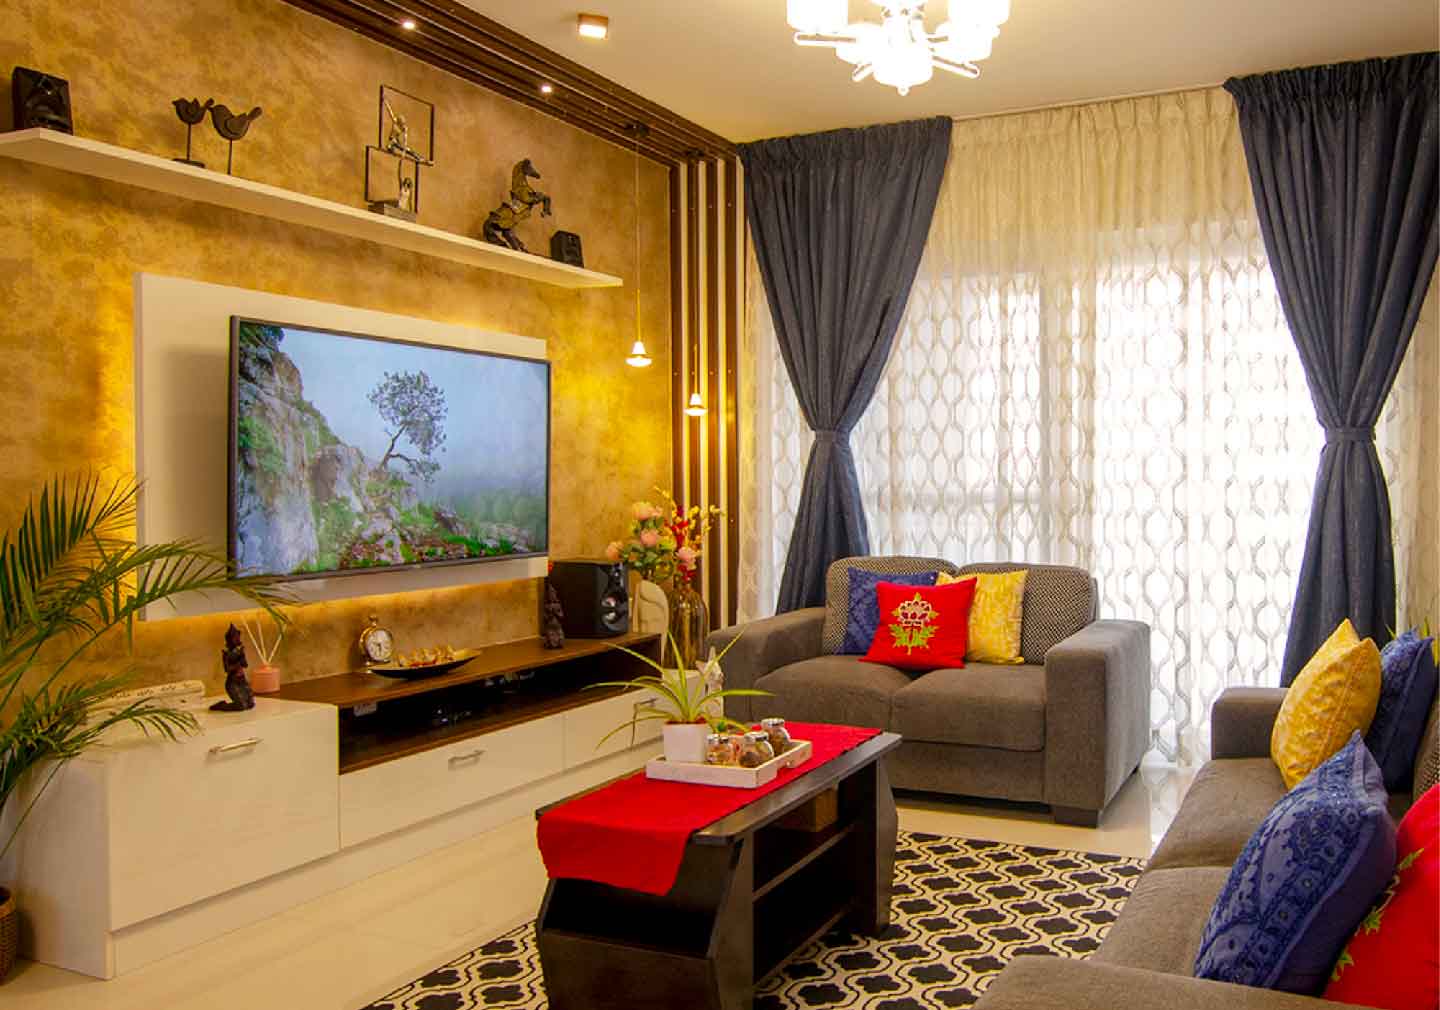 The Furniture - Living Room Interior Design